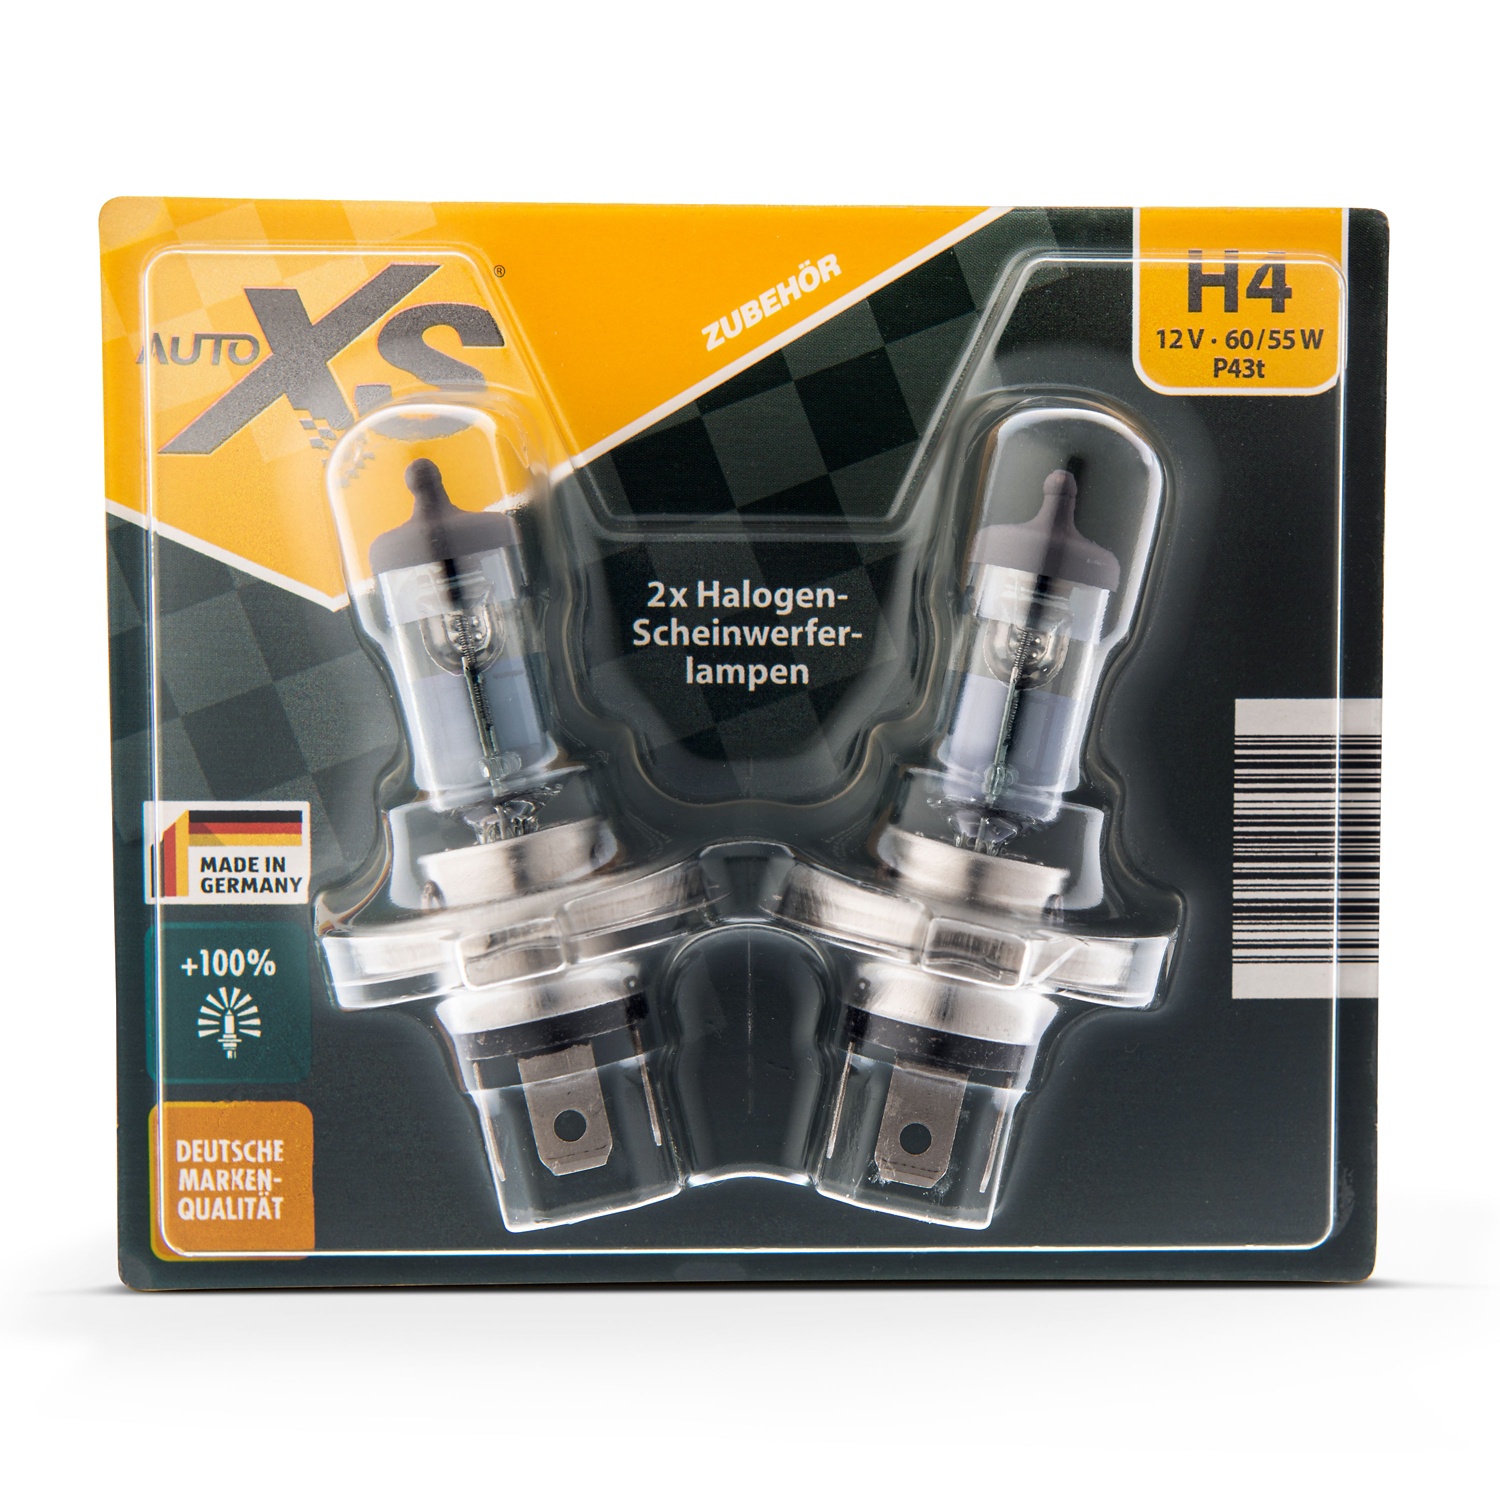 AUTO XS Premium Auto-Ersatzlampen-Set, H4 +100%